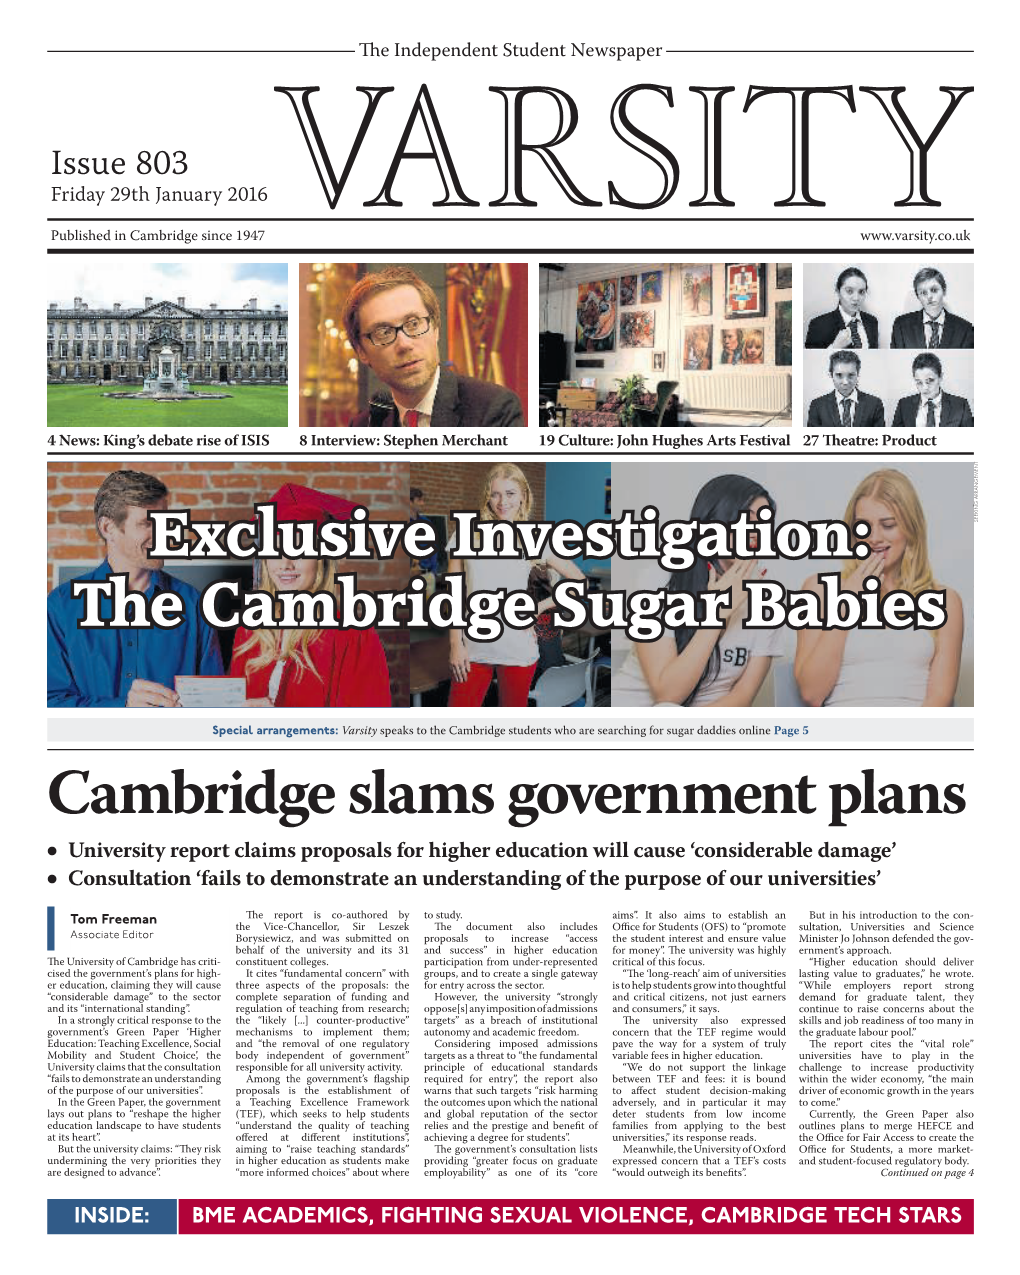 Cambridge Slams Government Plans